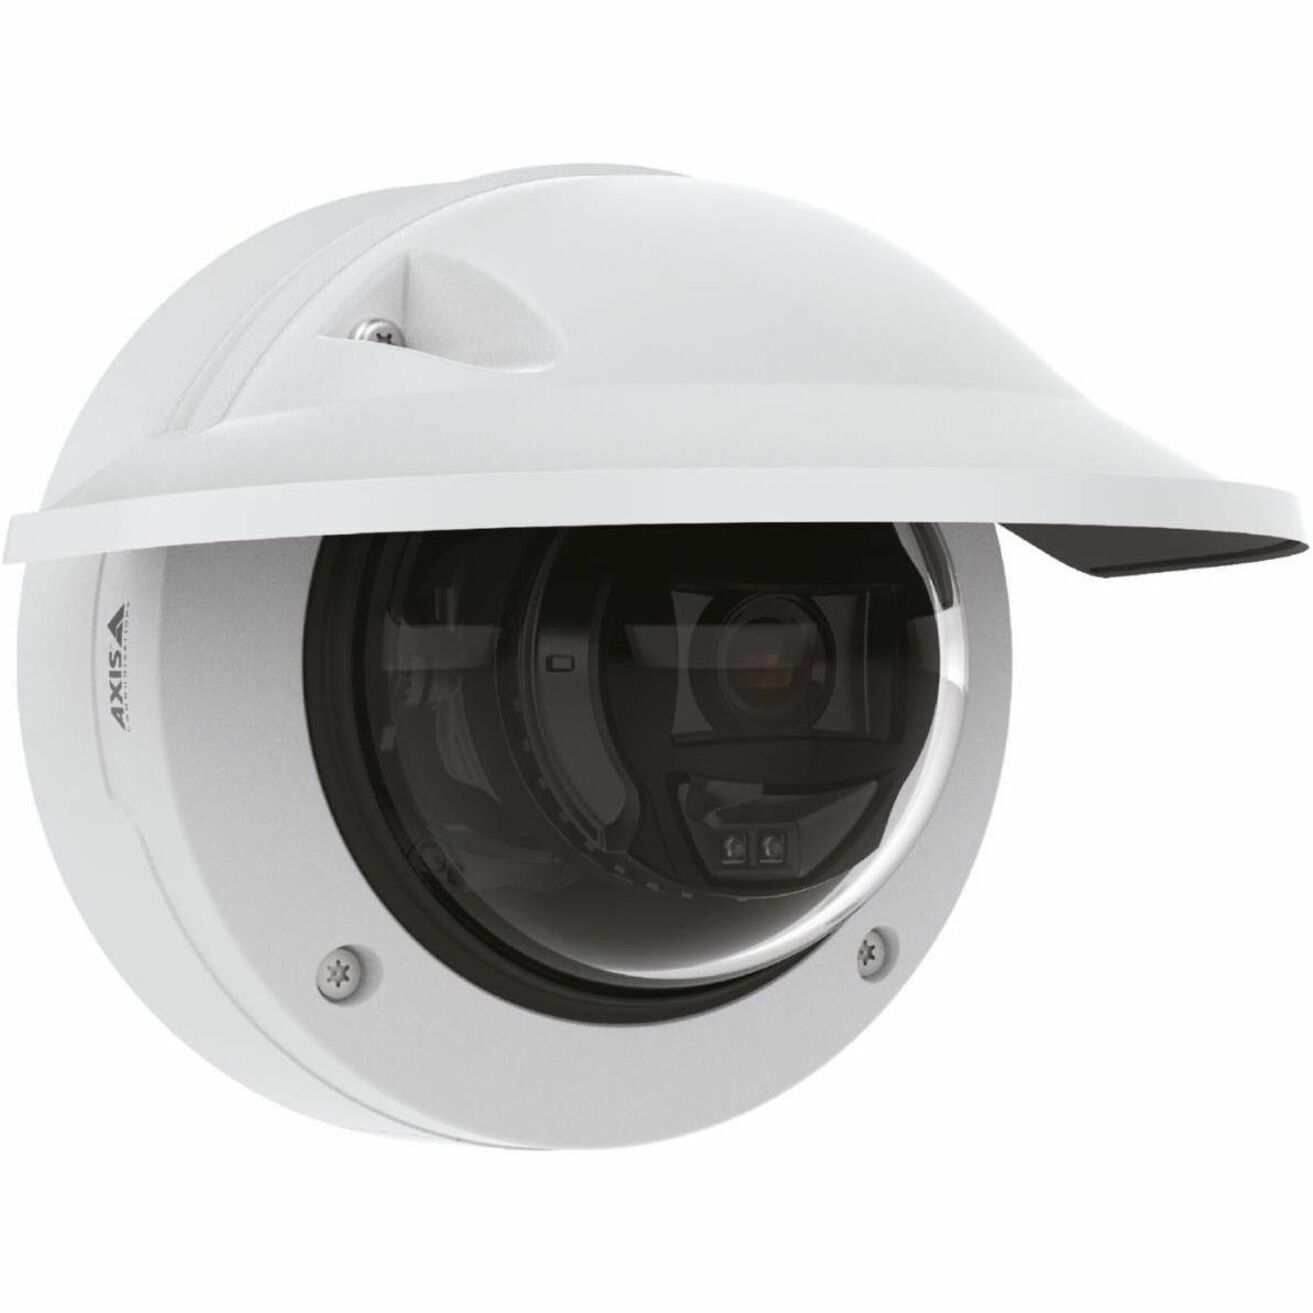 AXIS 02812-001 P3265-LVE-3 License Plate Verifier Kit, Outdoor Network Camera, 2MP, Varifocal Lens, PoE